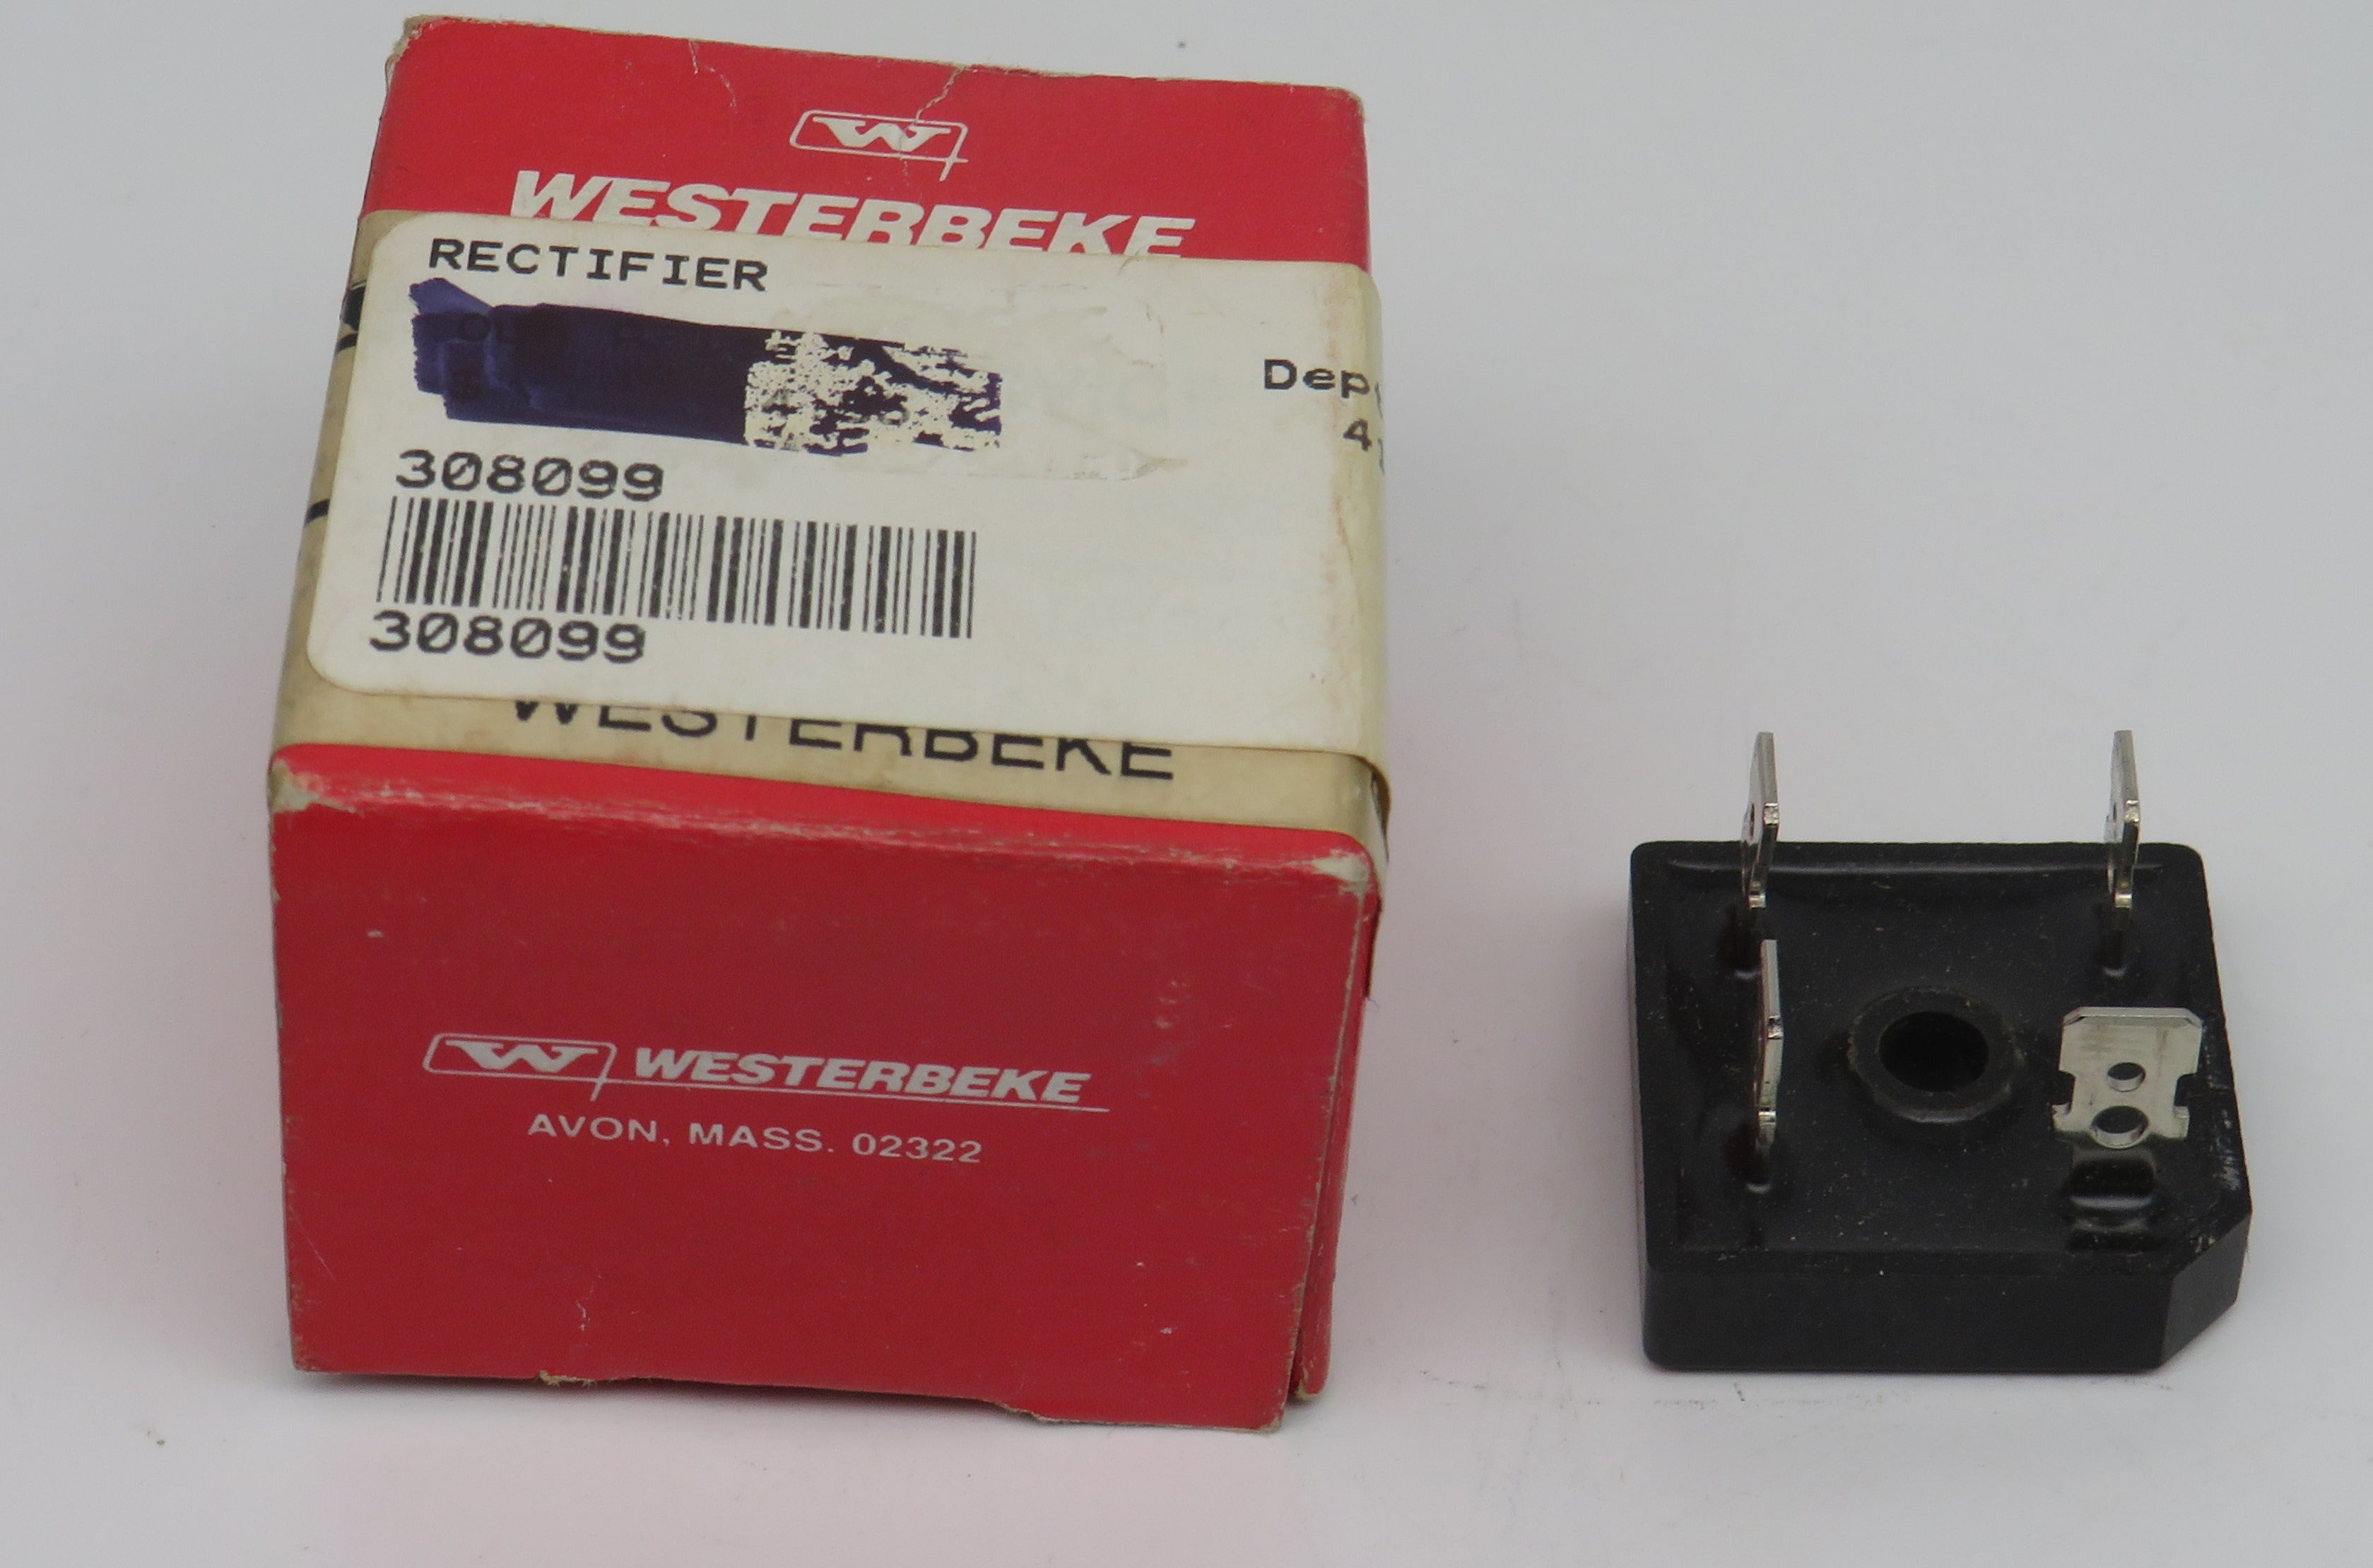 43649 Westerbeke Rectifier (60 Hz) Replaced 308099